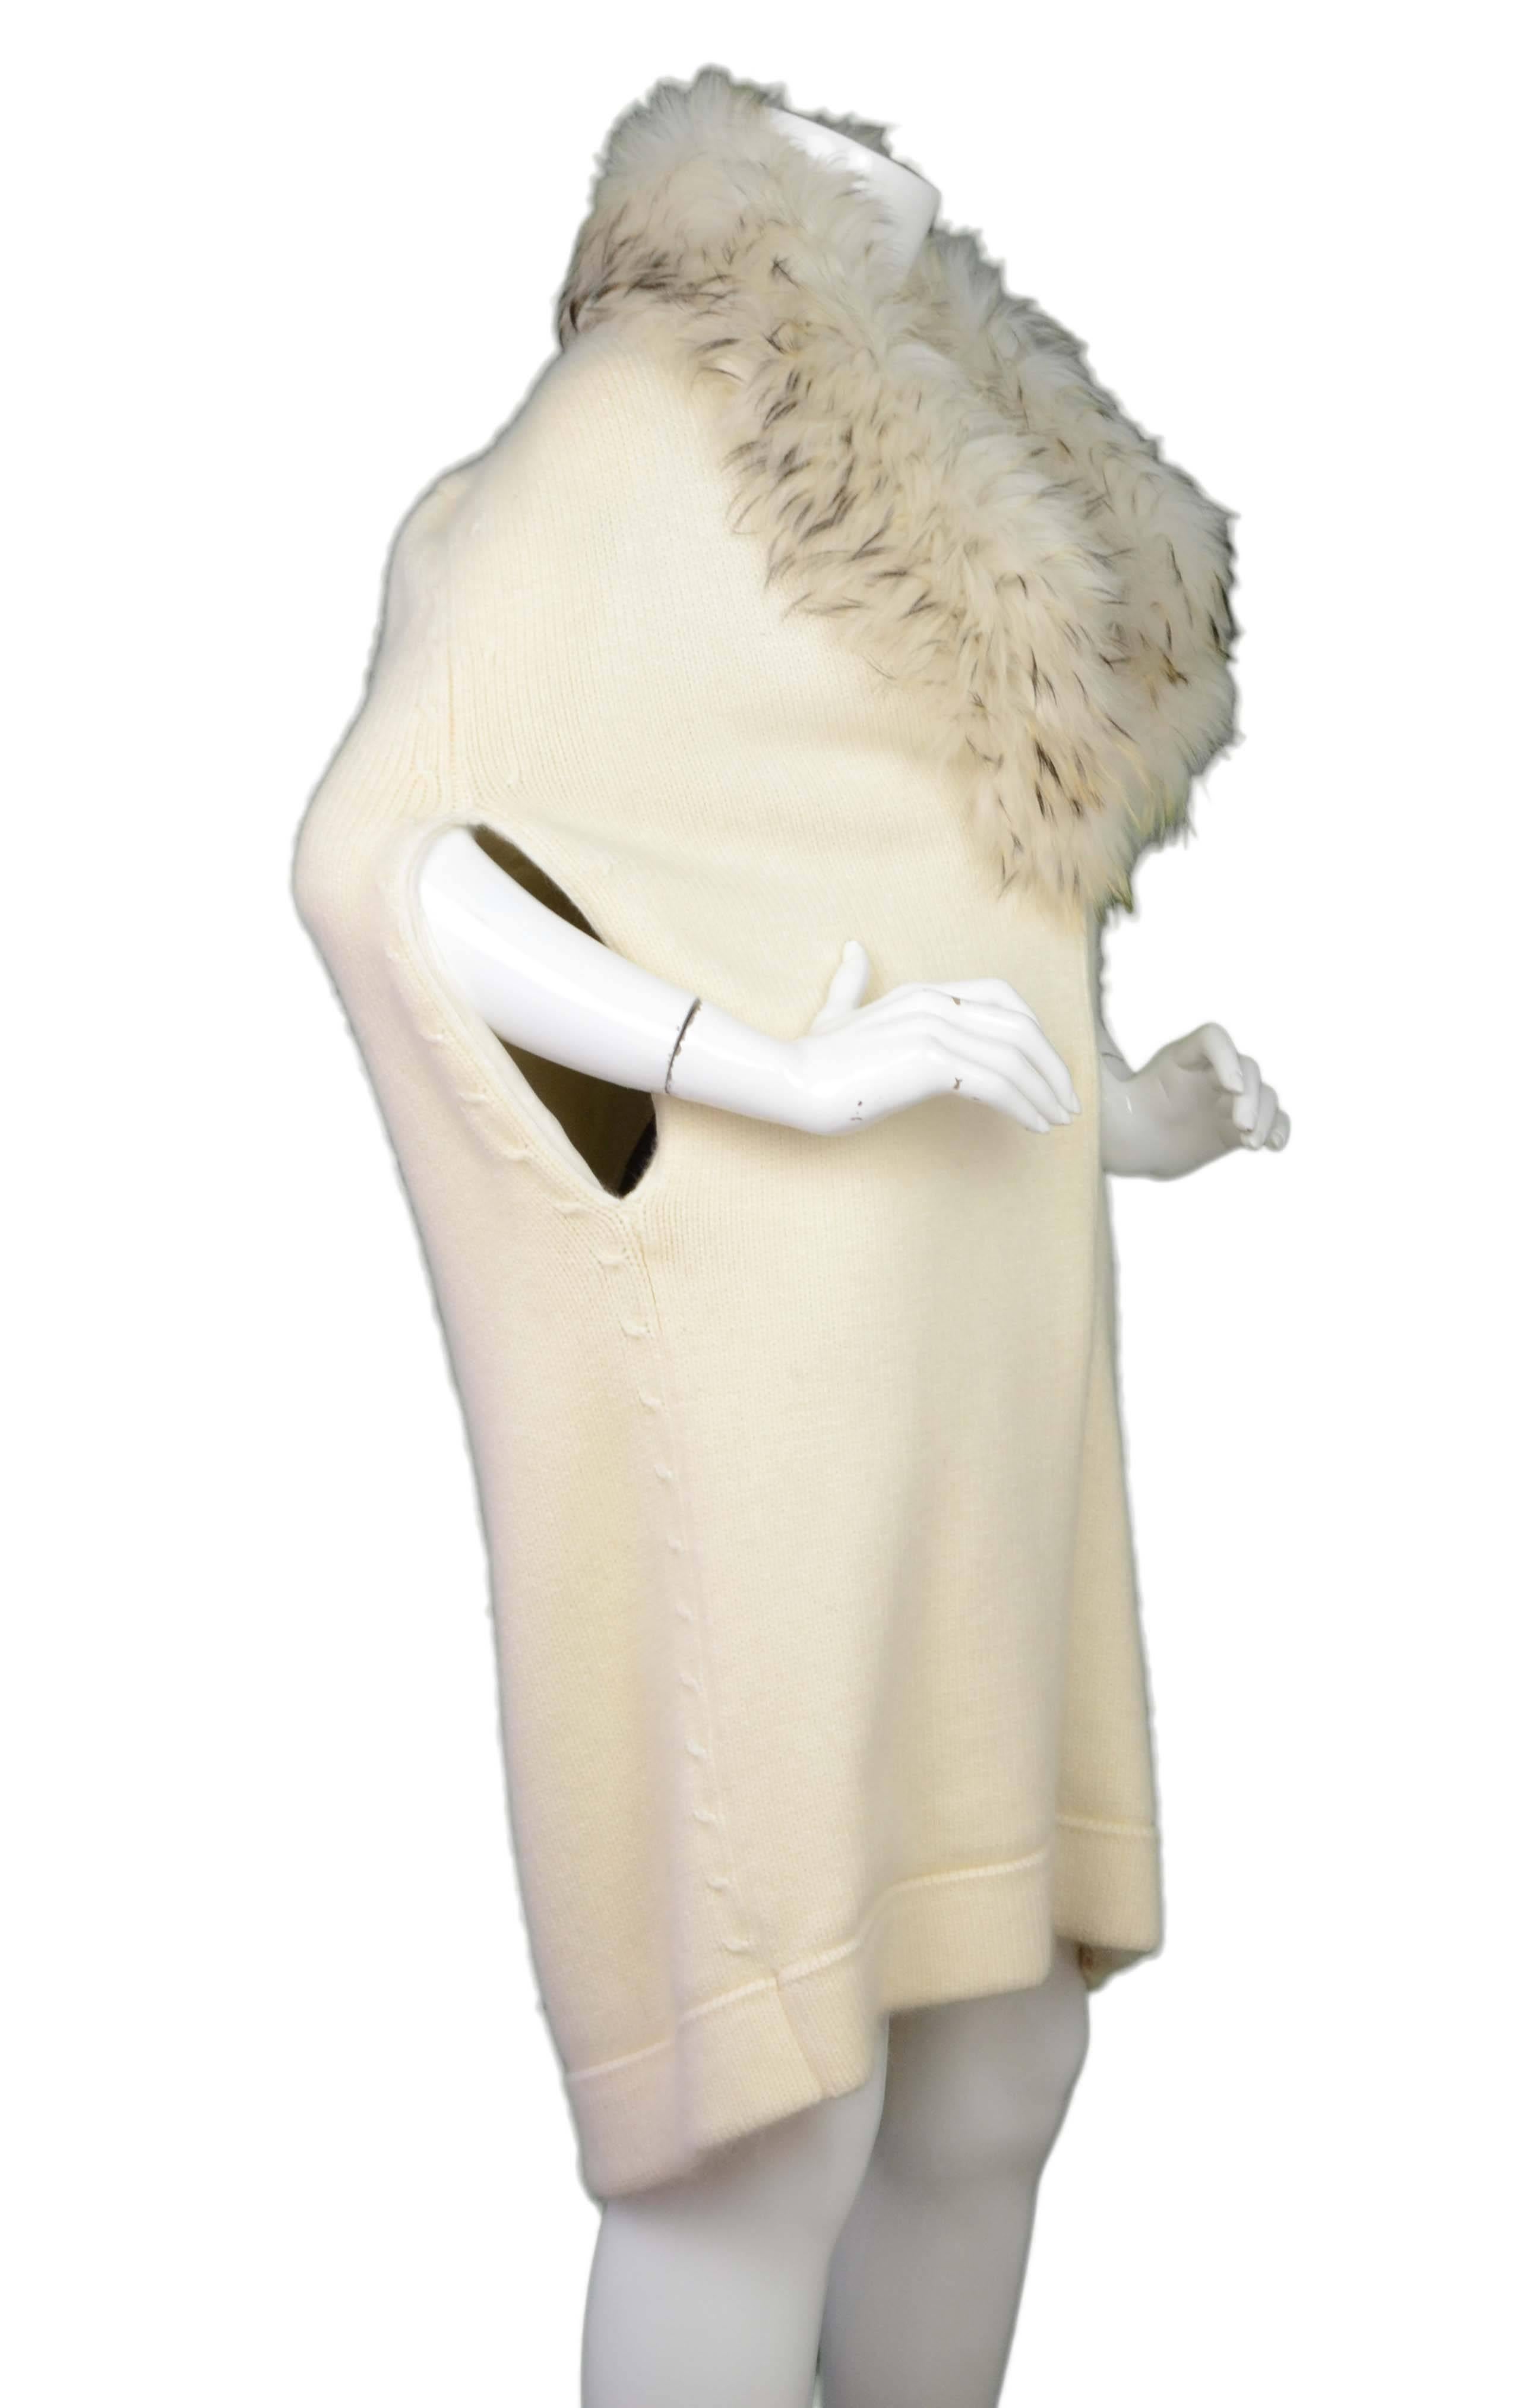 Roberto Cavalli Cream Knit & Fur Collar Cape 
Features removable fur collar
Made In: Italy
Color: Cream
Composition: Collar- 100% fur, Cape- 40% viscose, 20% wool, 18% mohair, 14% nylon
Lining: Cream, 92% cupro, 8% elastane
Closure/Opening: